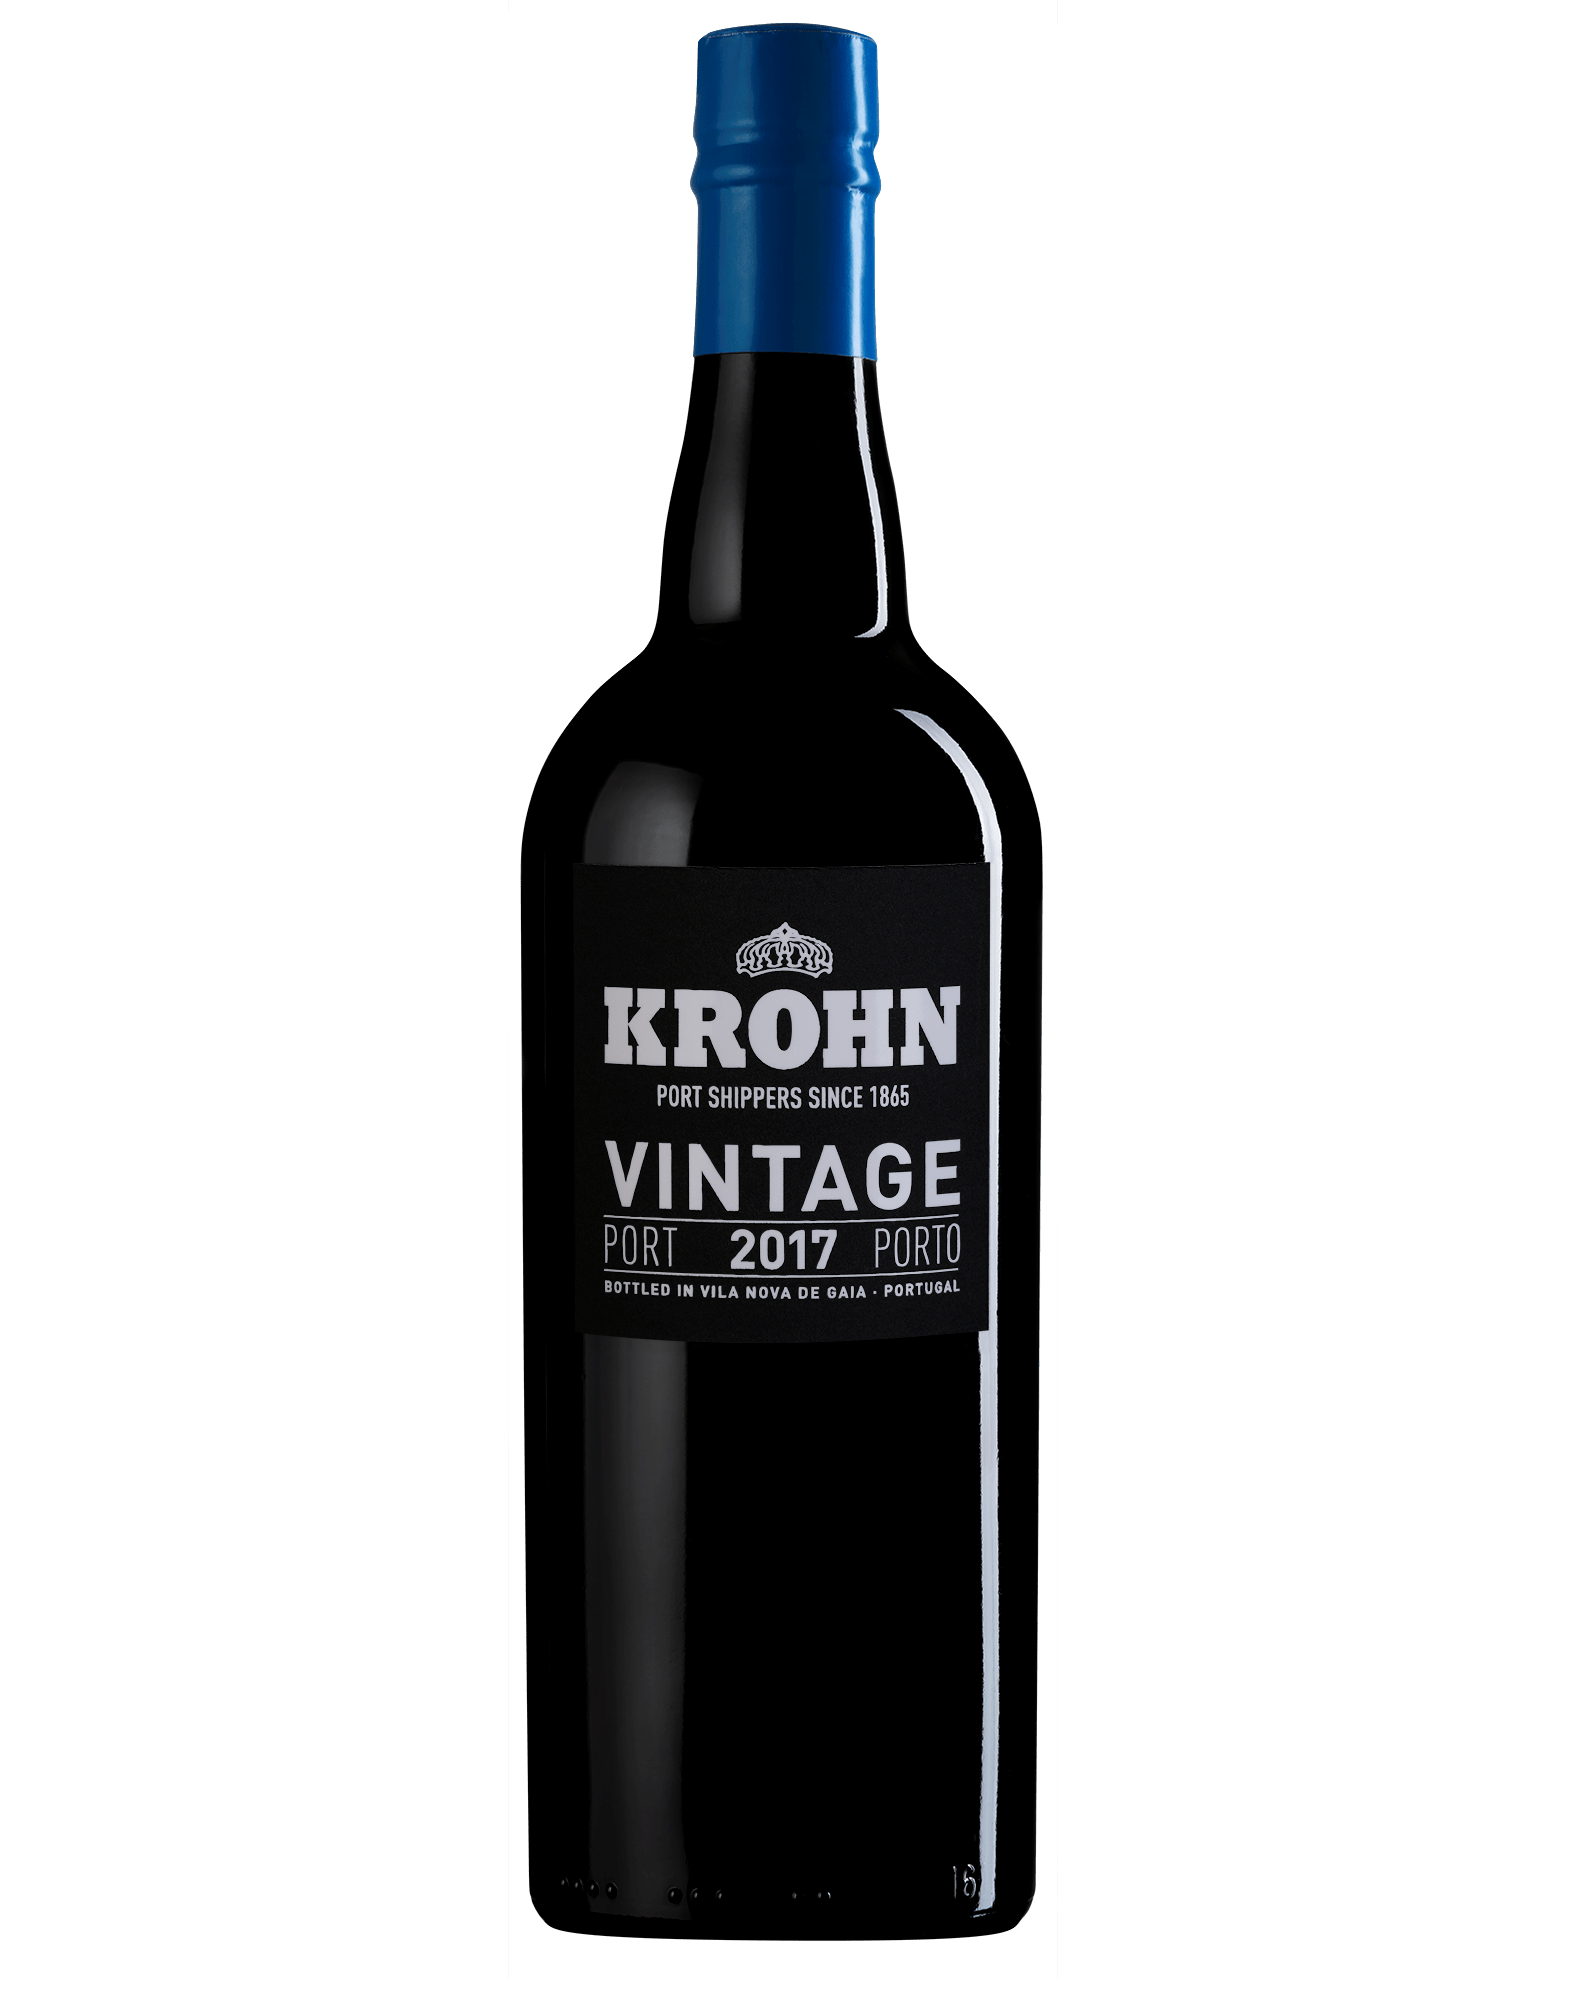 Wiese & Krohn Vintage 2017 (106,67€ / litro)